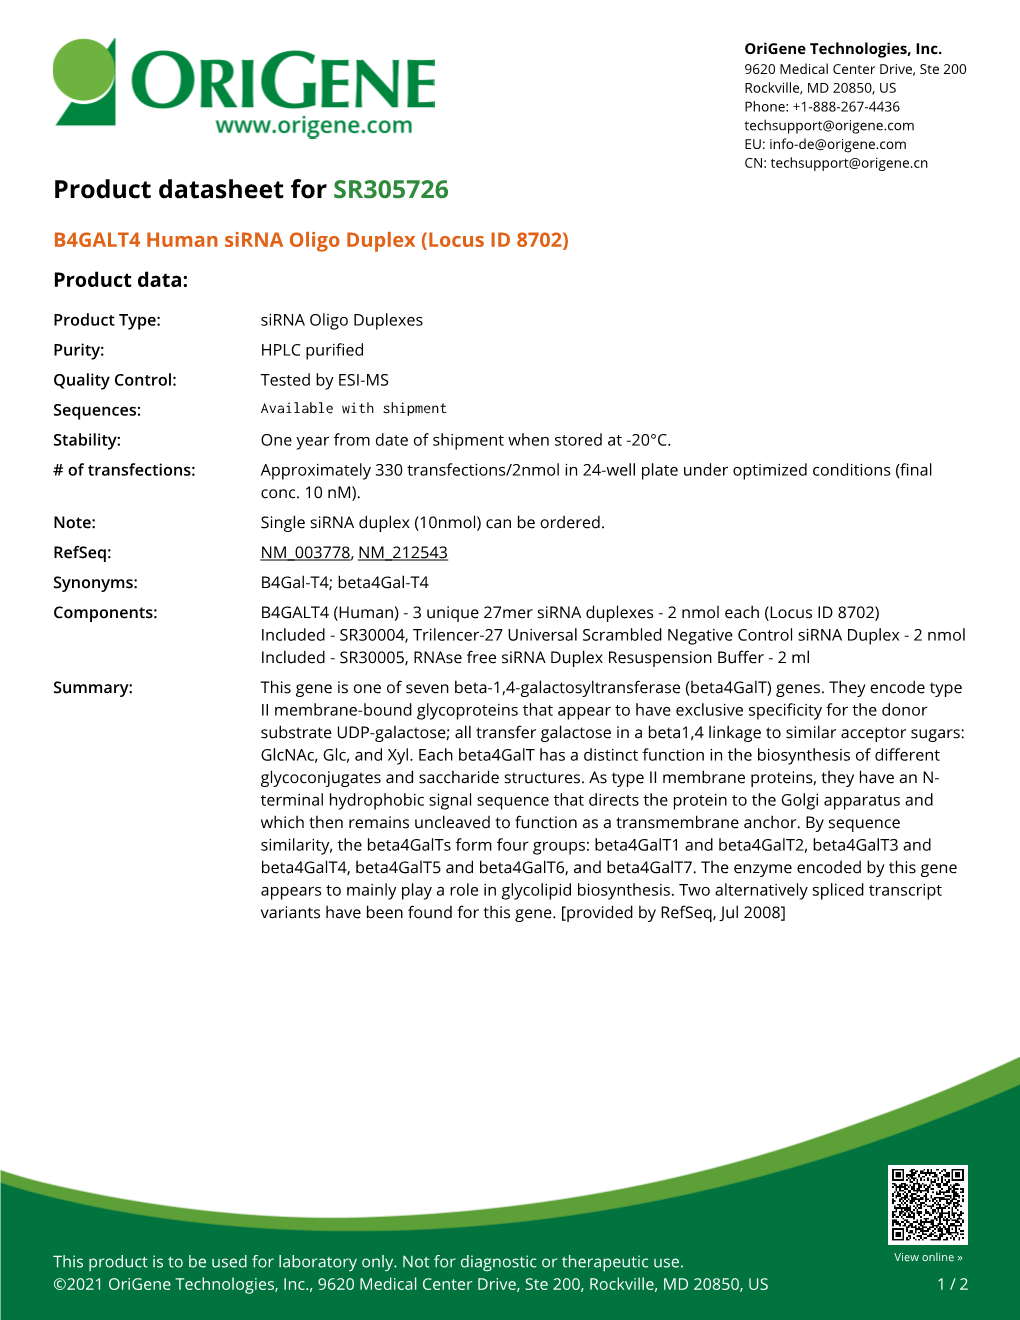 B4GALT4 Human Sirna Oligo Duplex (Locus ID 8702) Product Data